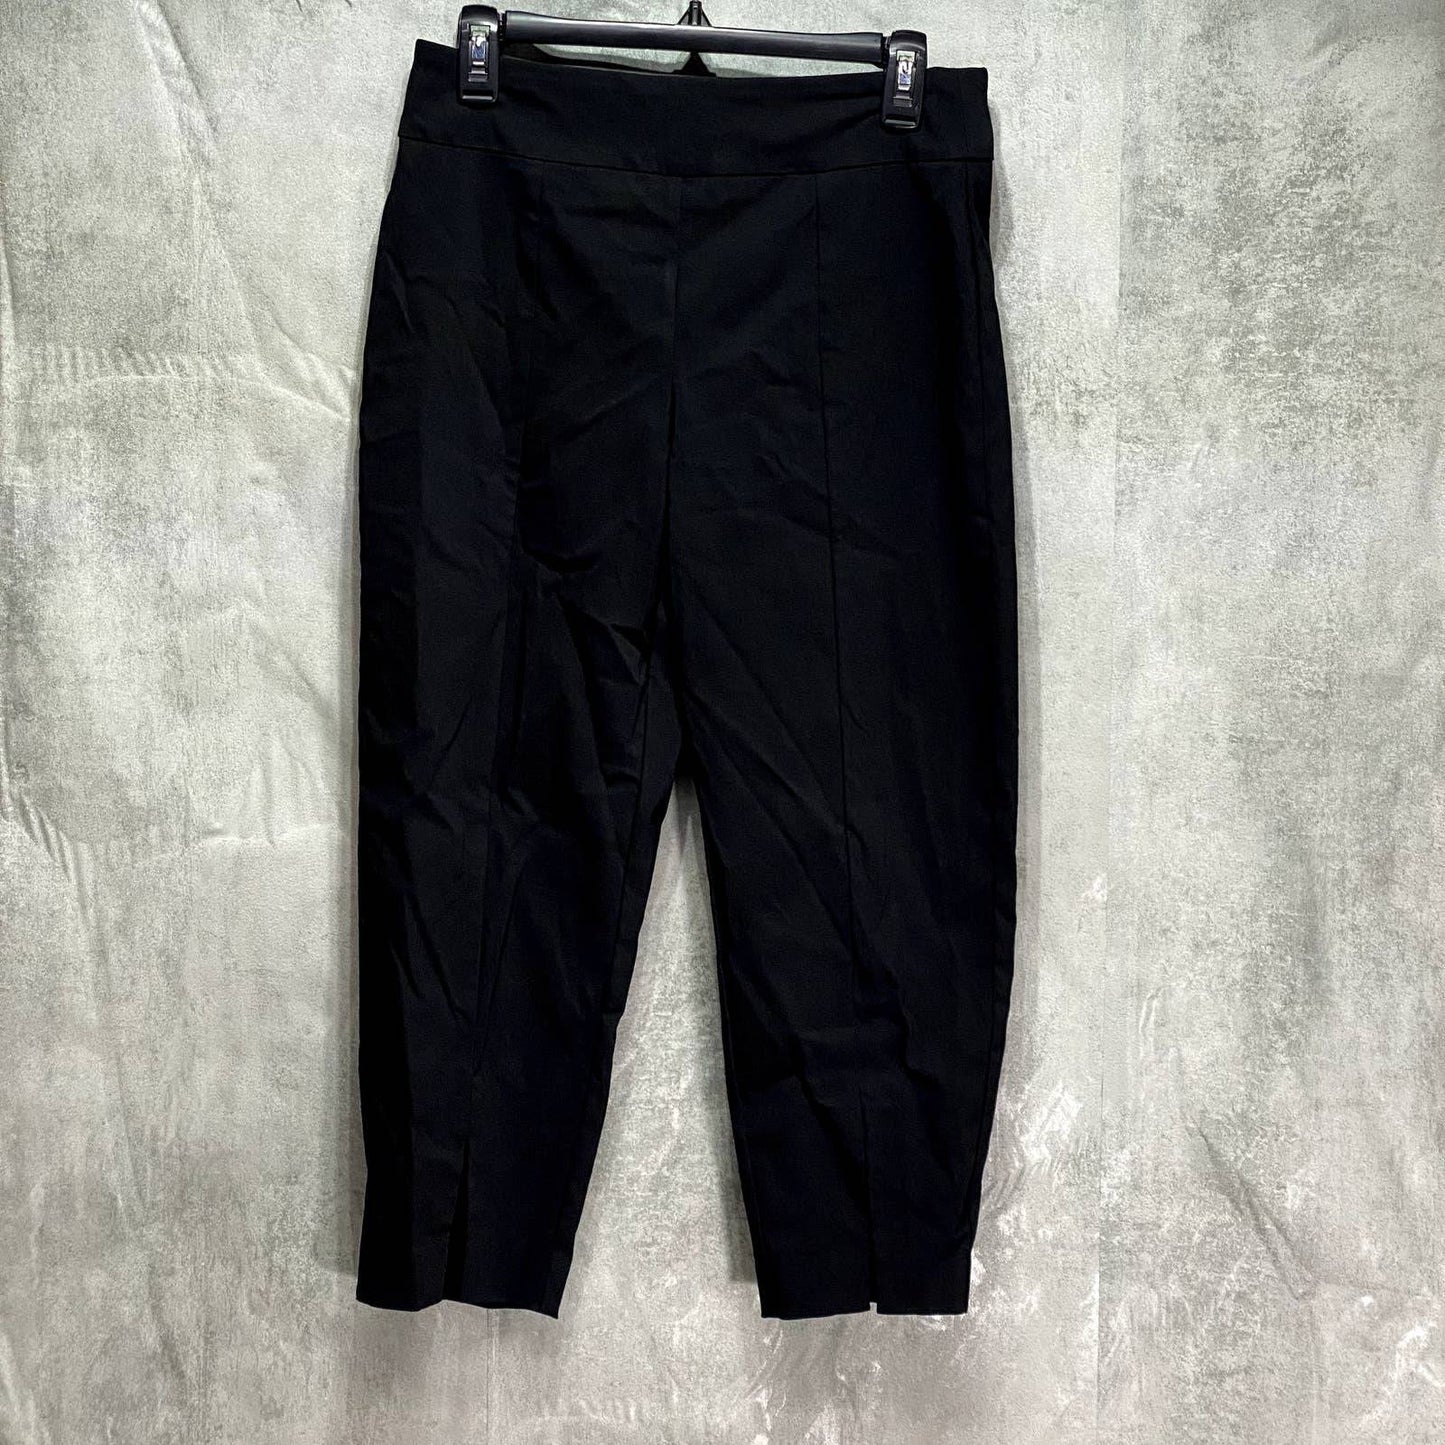 JM COLLECTION Petite Solid Black Split-Hem Tummy Control Pull-On Capri Pants SZ P/M